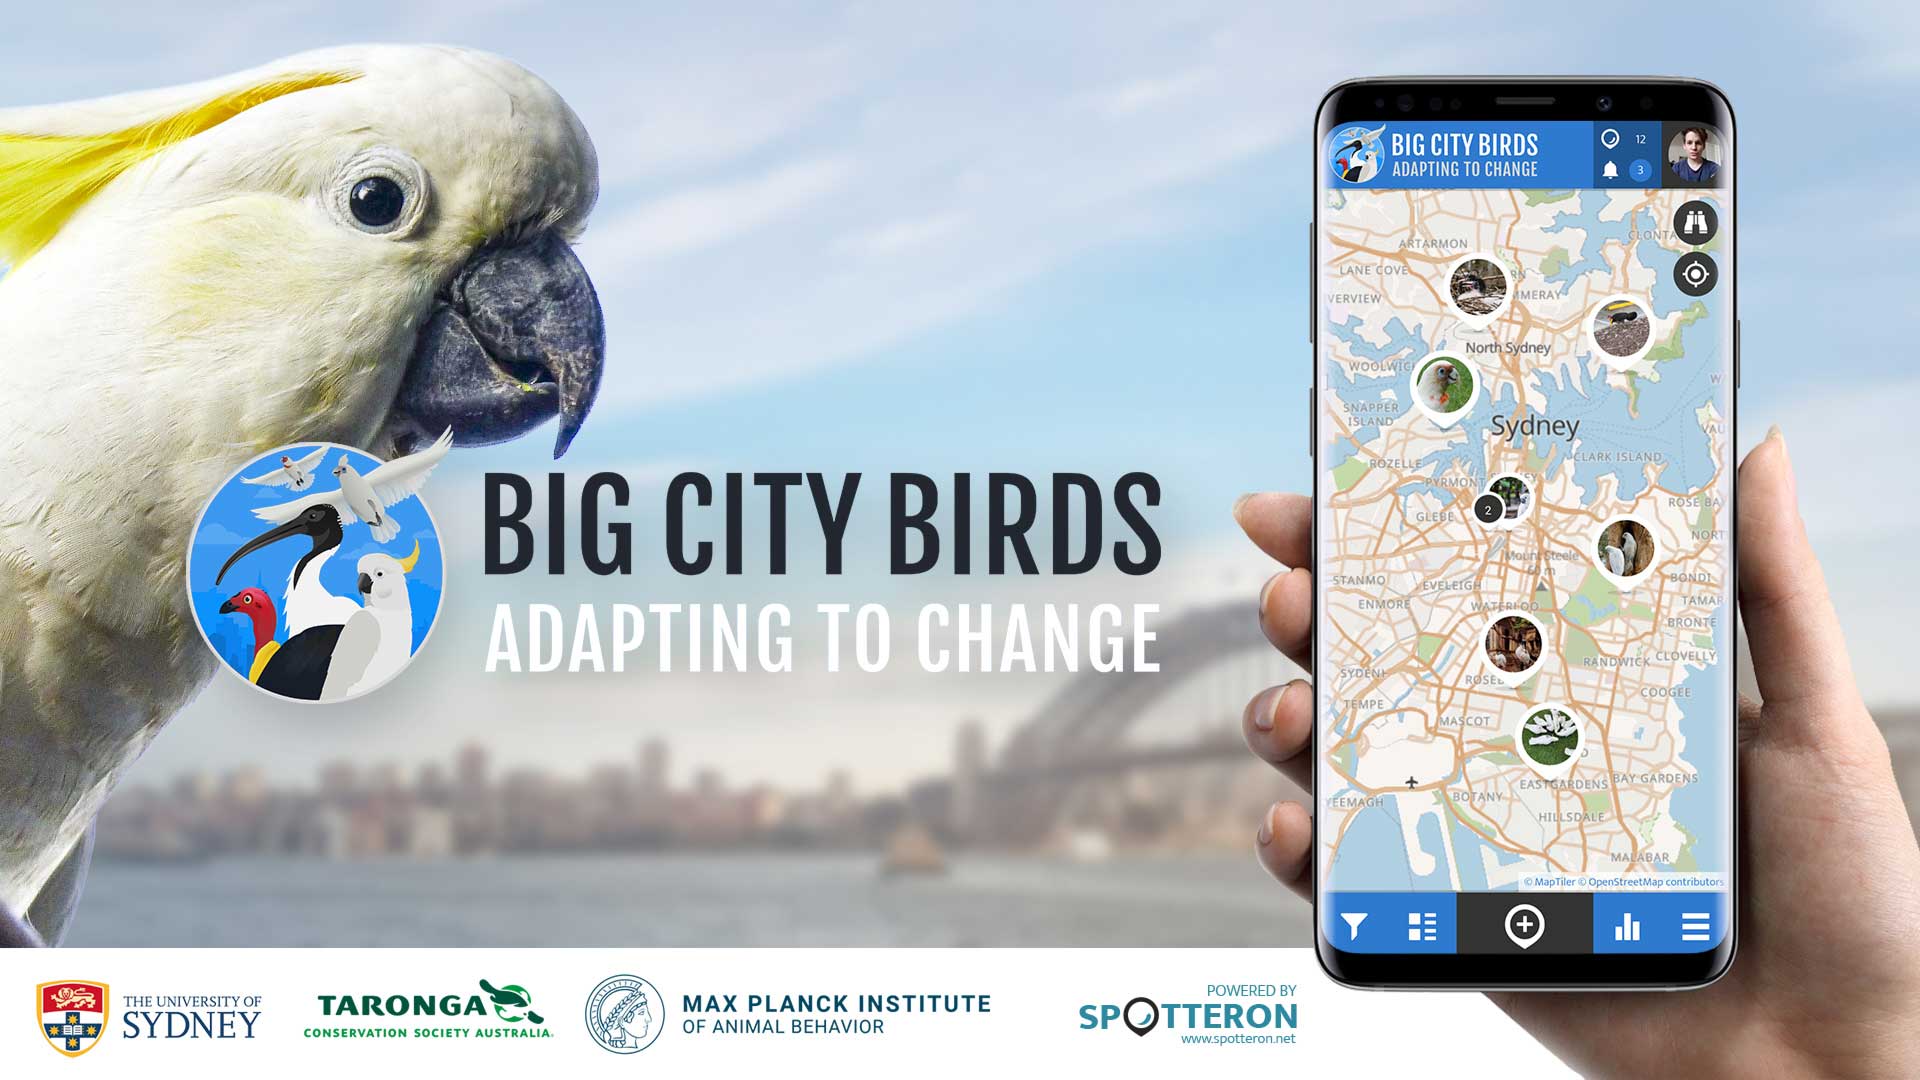 Big City Birds - Adapting to Change